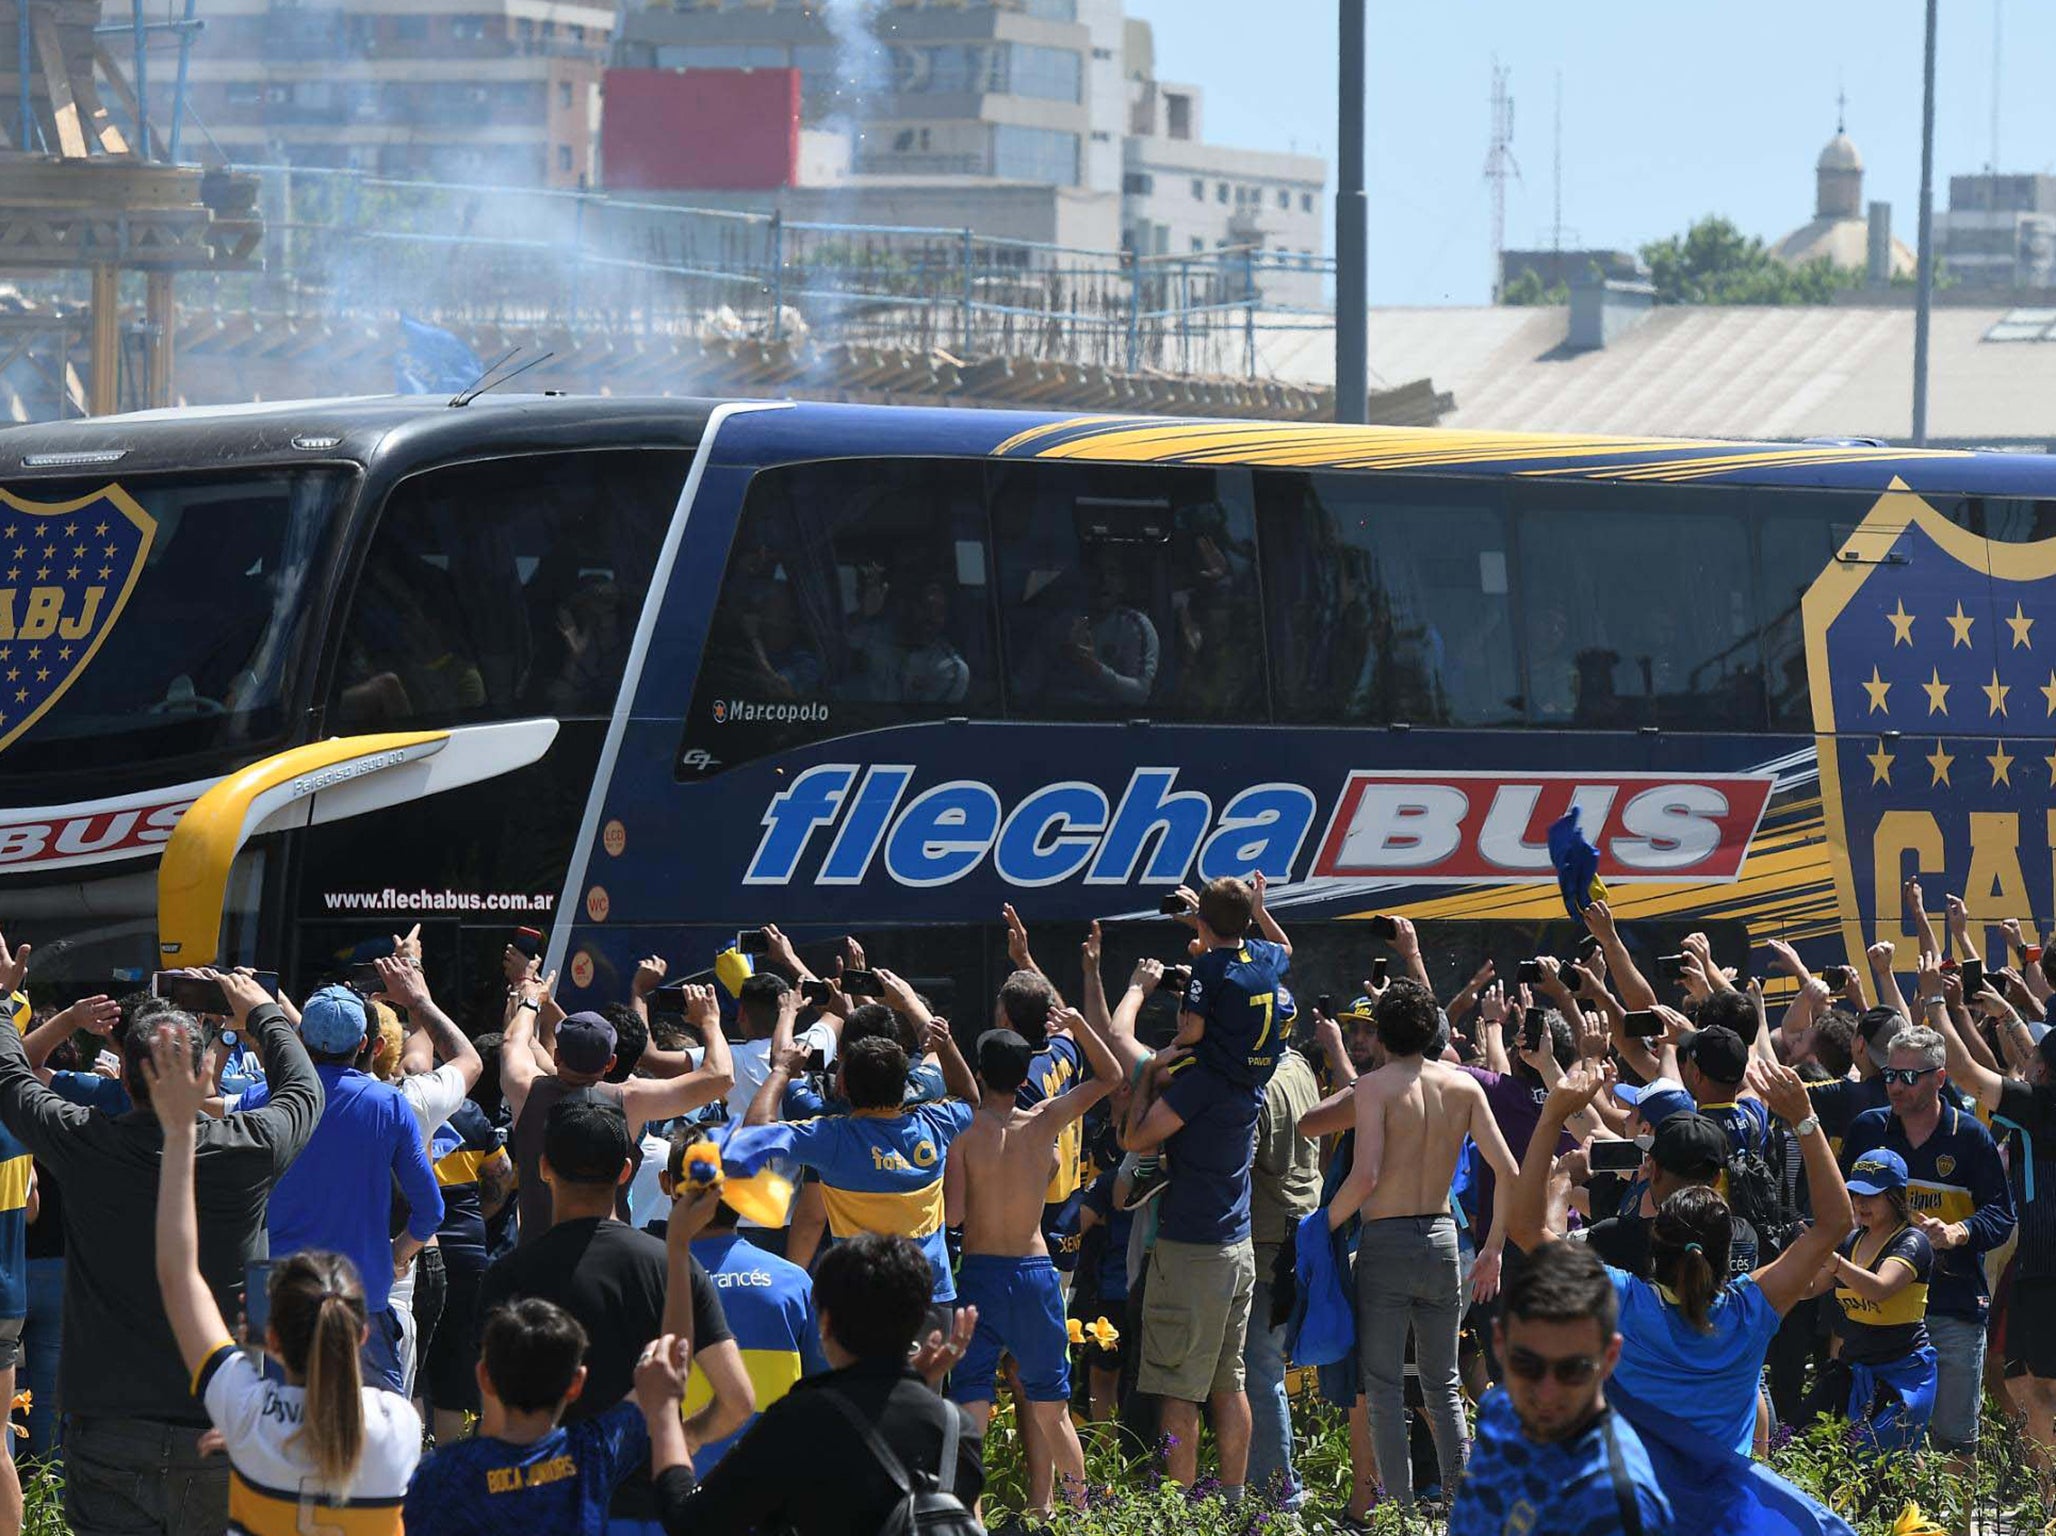 The Boca team bus came under attack